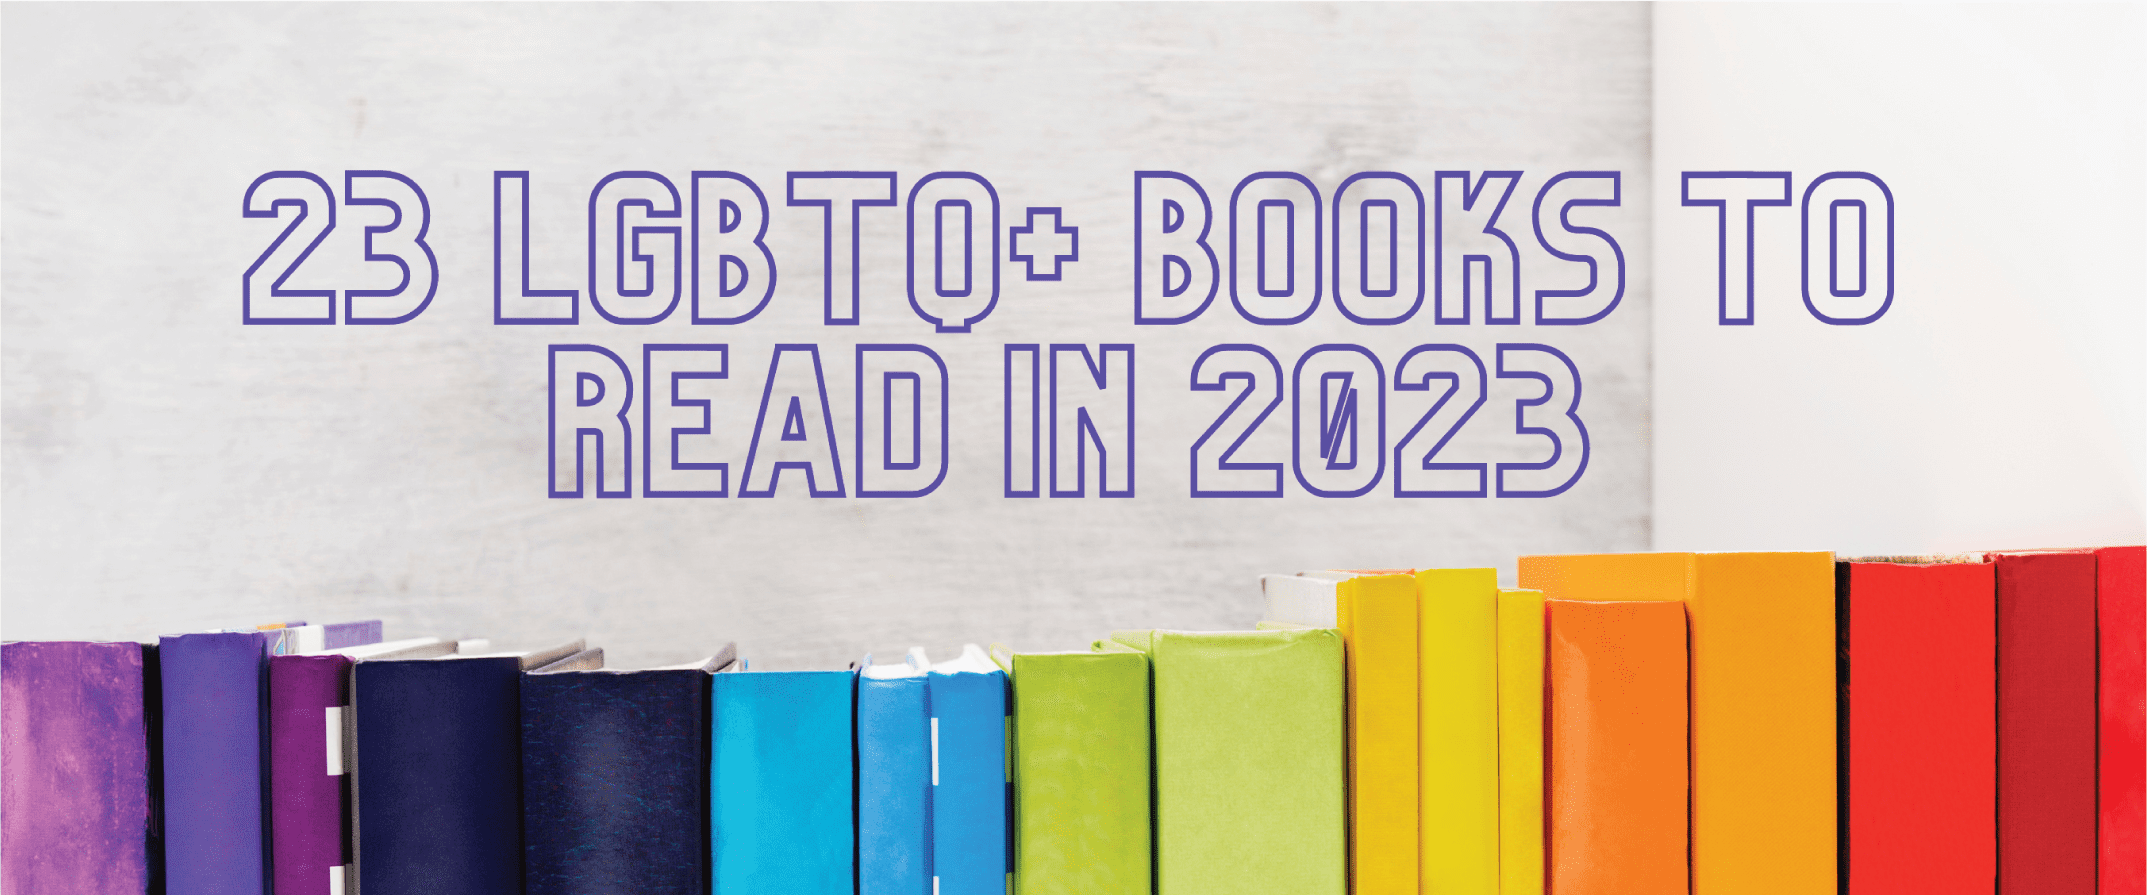 23 LGBTQ+ Books To Read In 2023